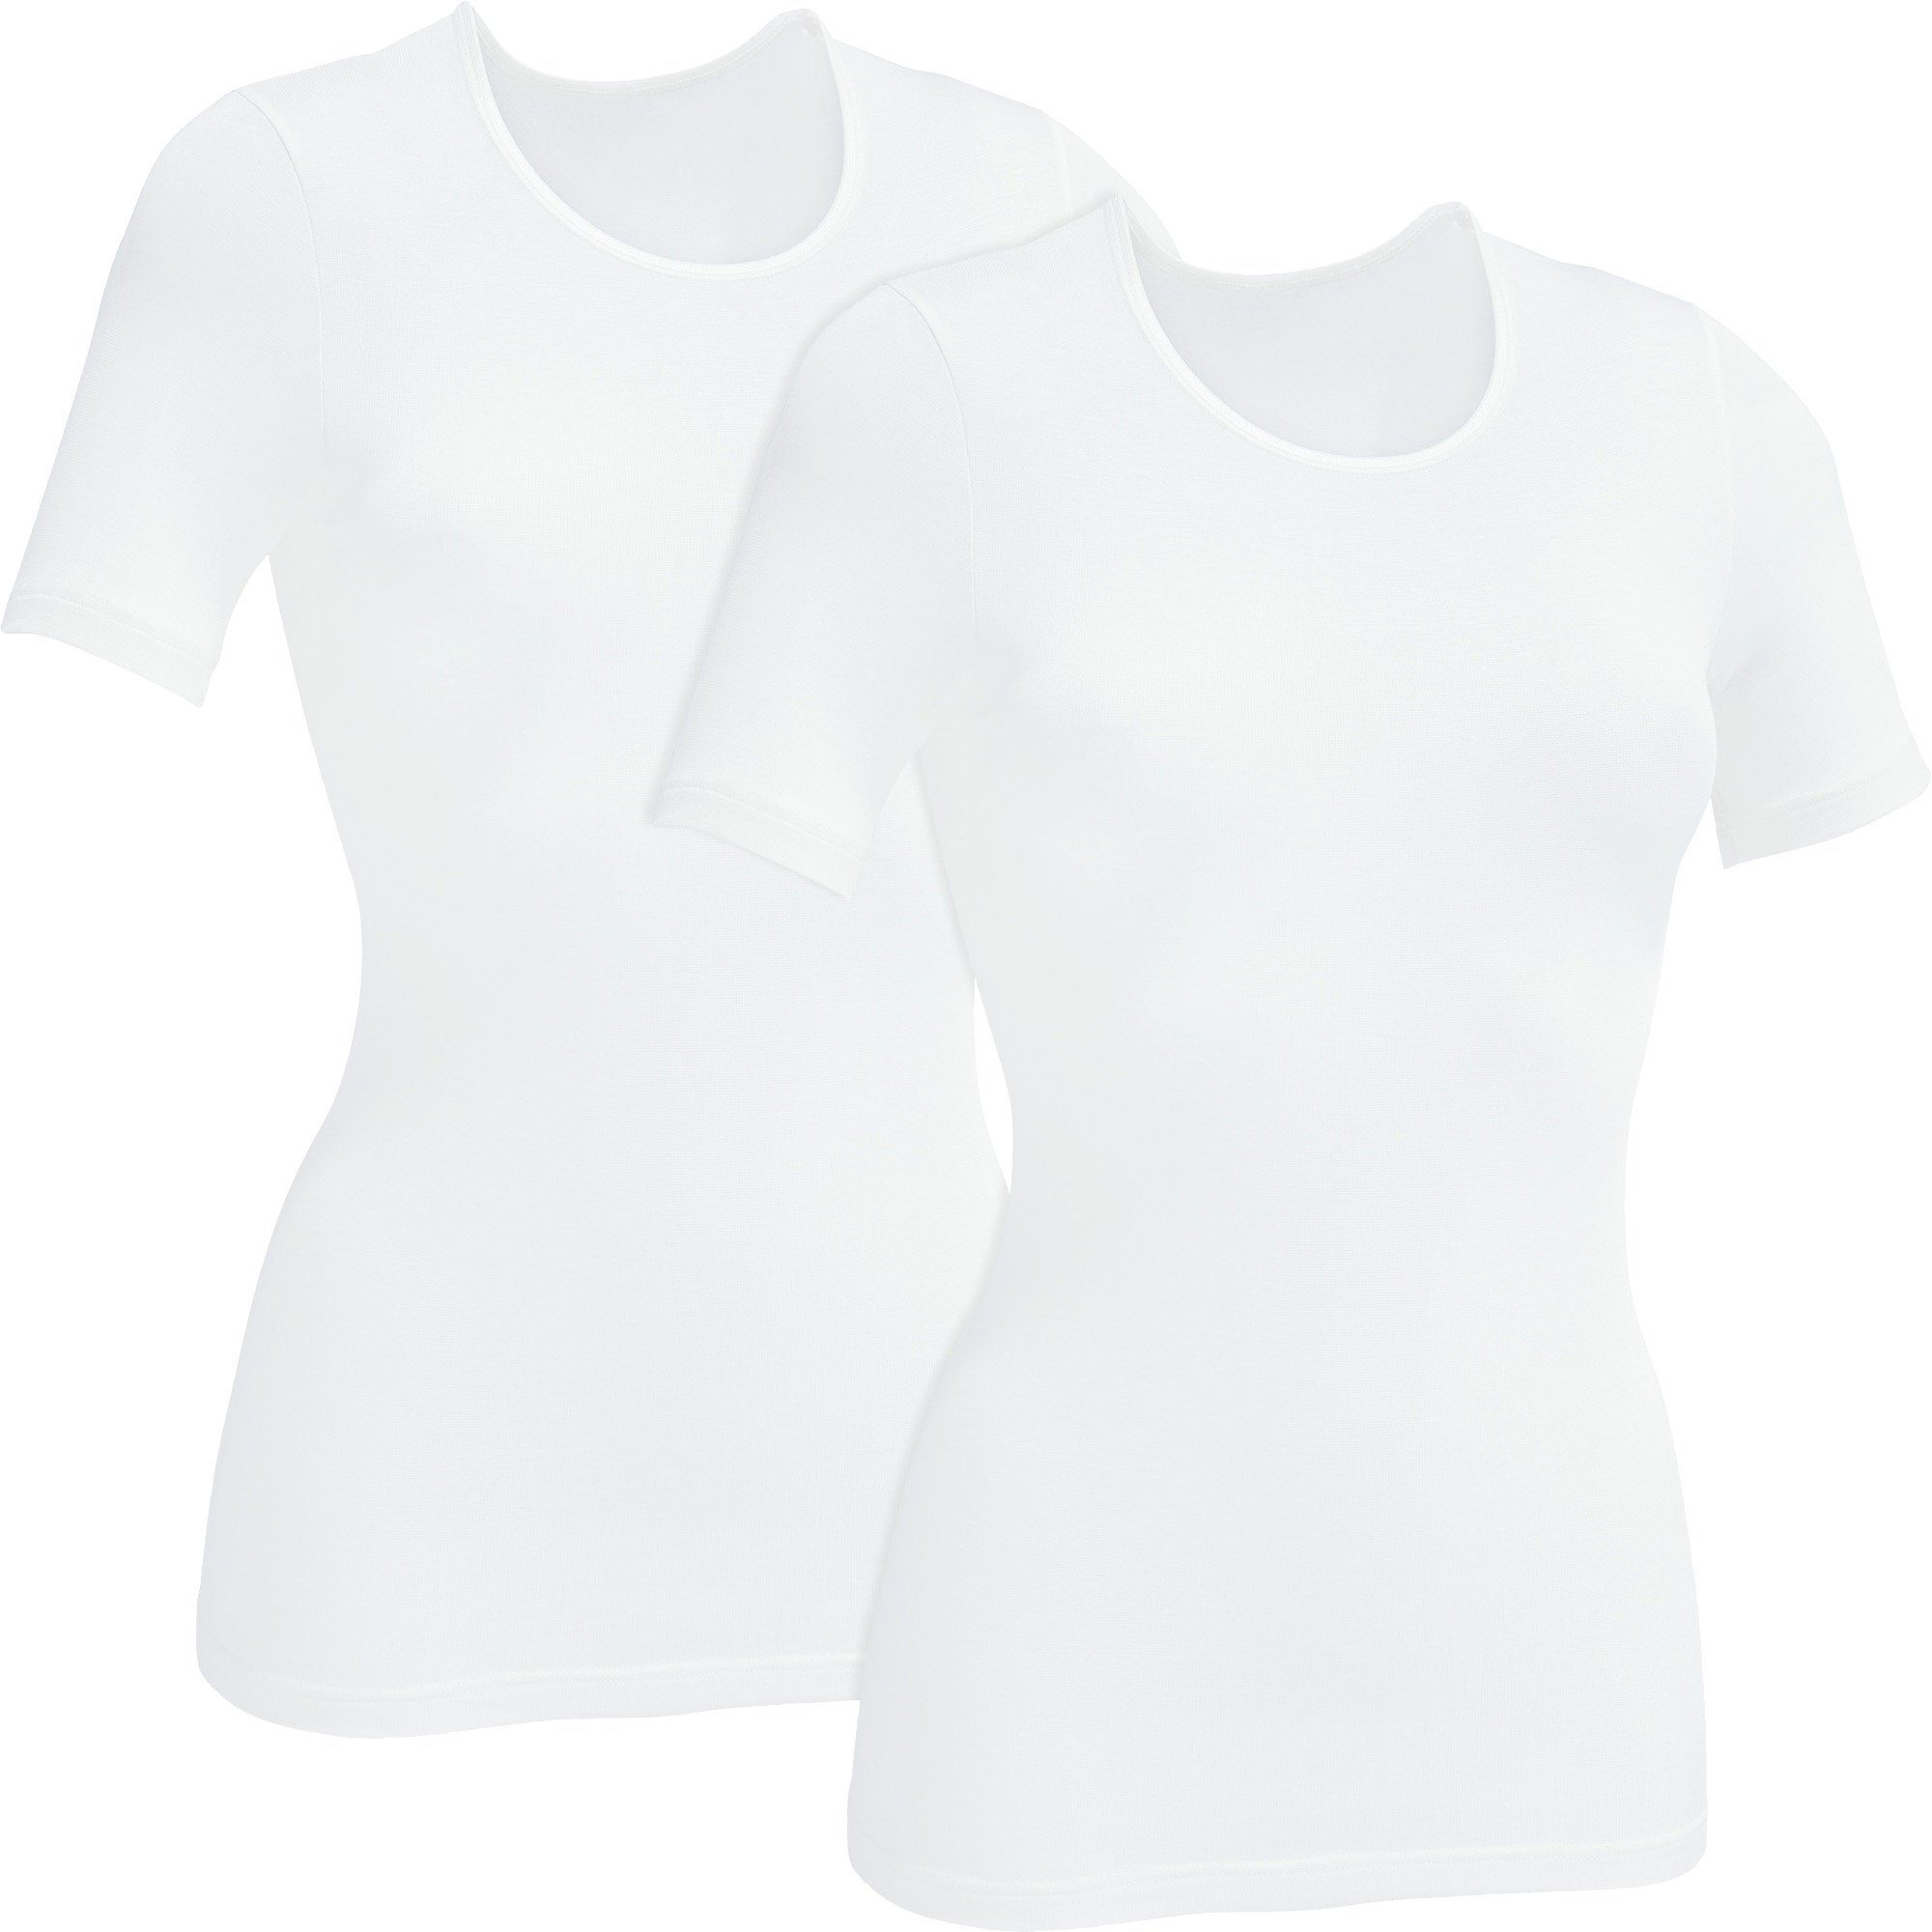 Aufsehen zu Erwin Müller T-Shirt Damen-Unterhemd, 1/2-Arm Uni (2-tlg) weiß Modal 2er-Pack